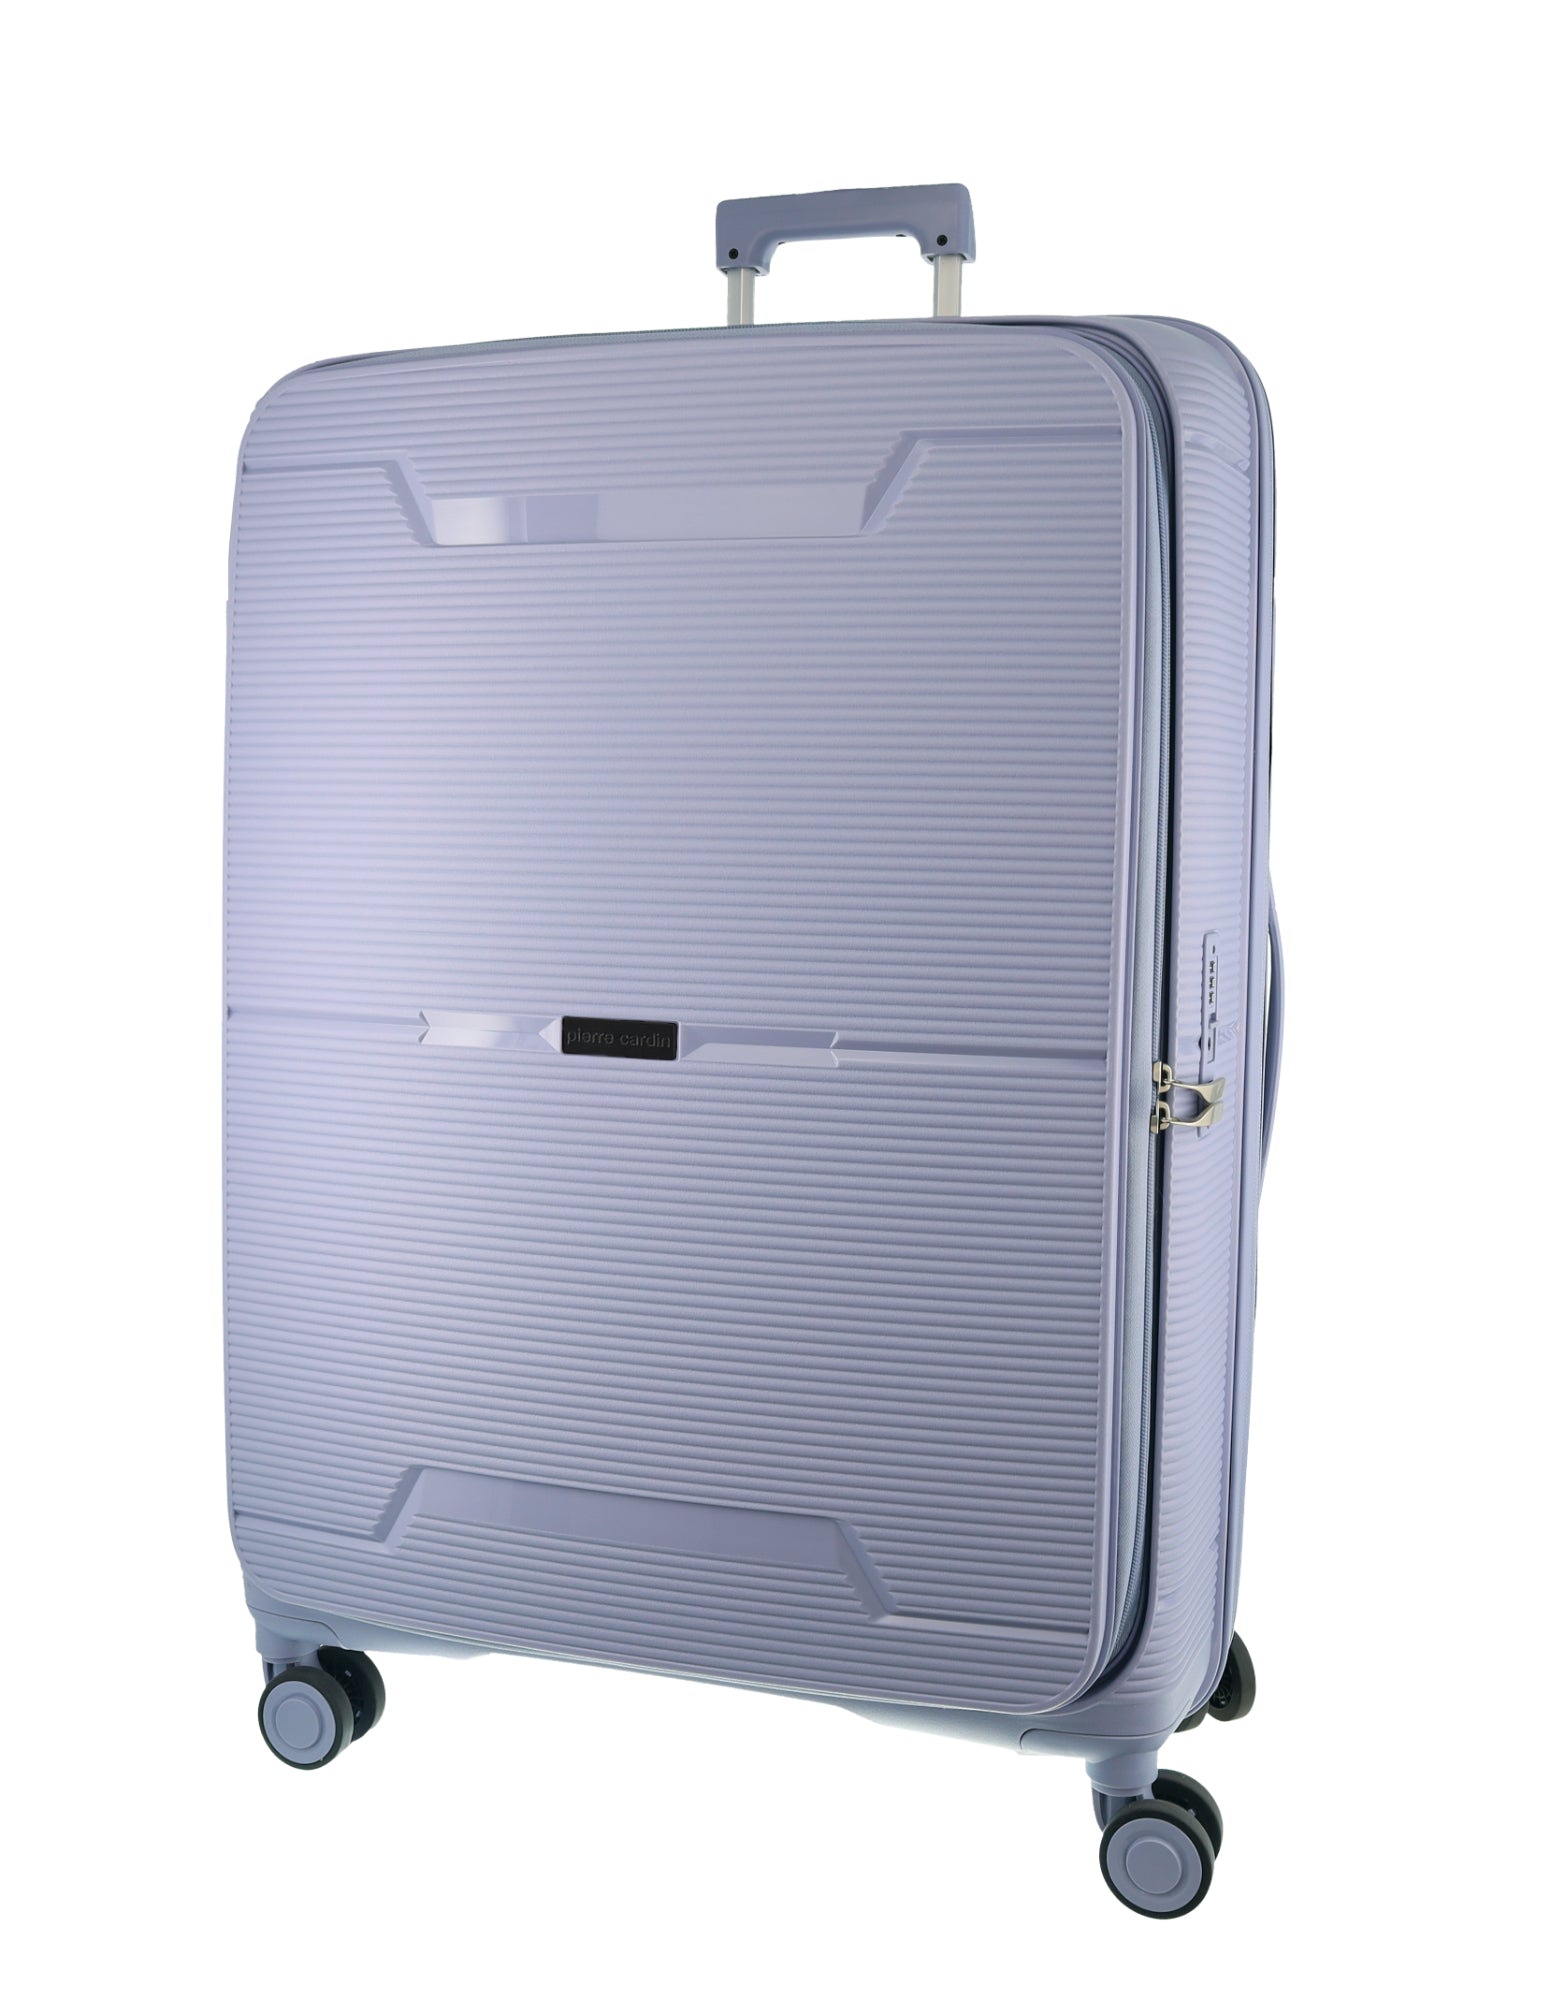 Pierre Cardin 69cm MEDIUM Hard Shell Suitcase in Blue